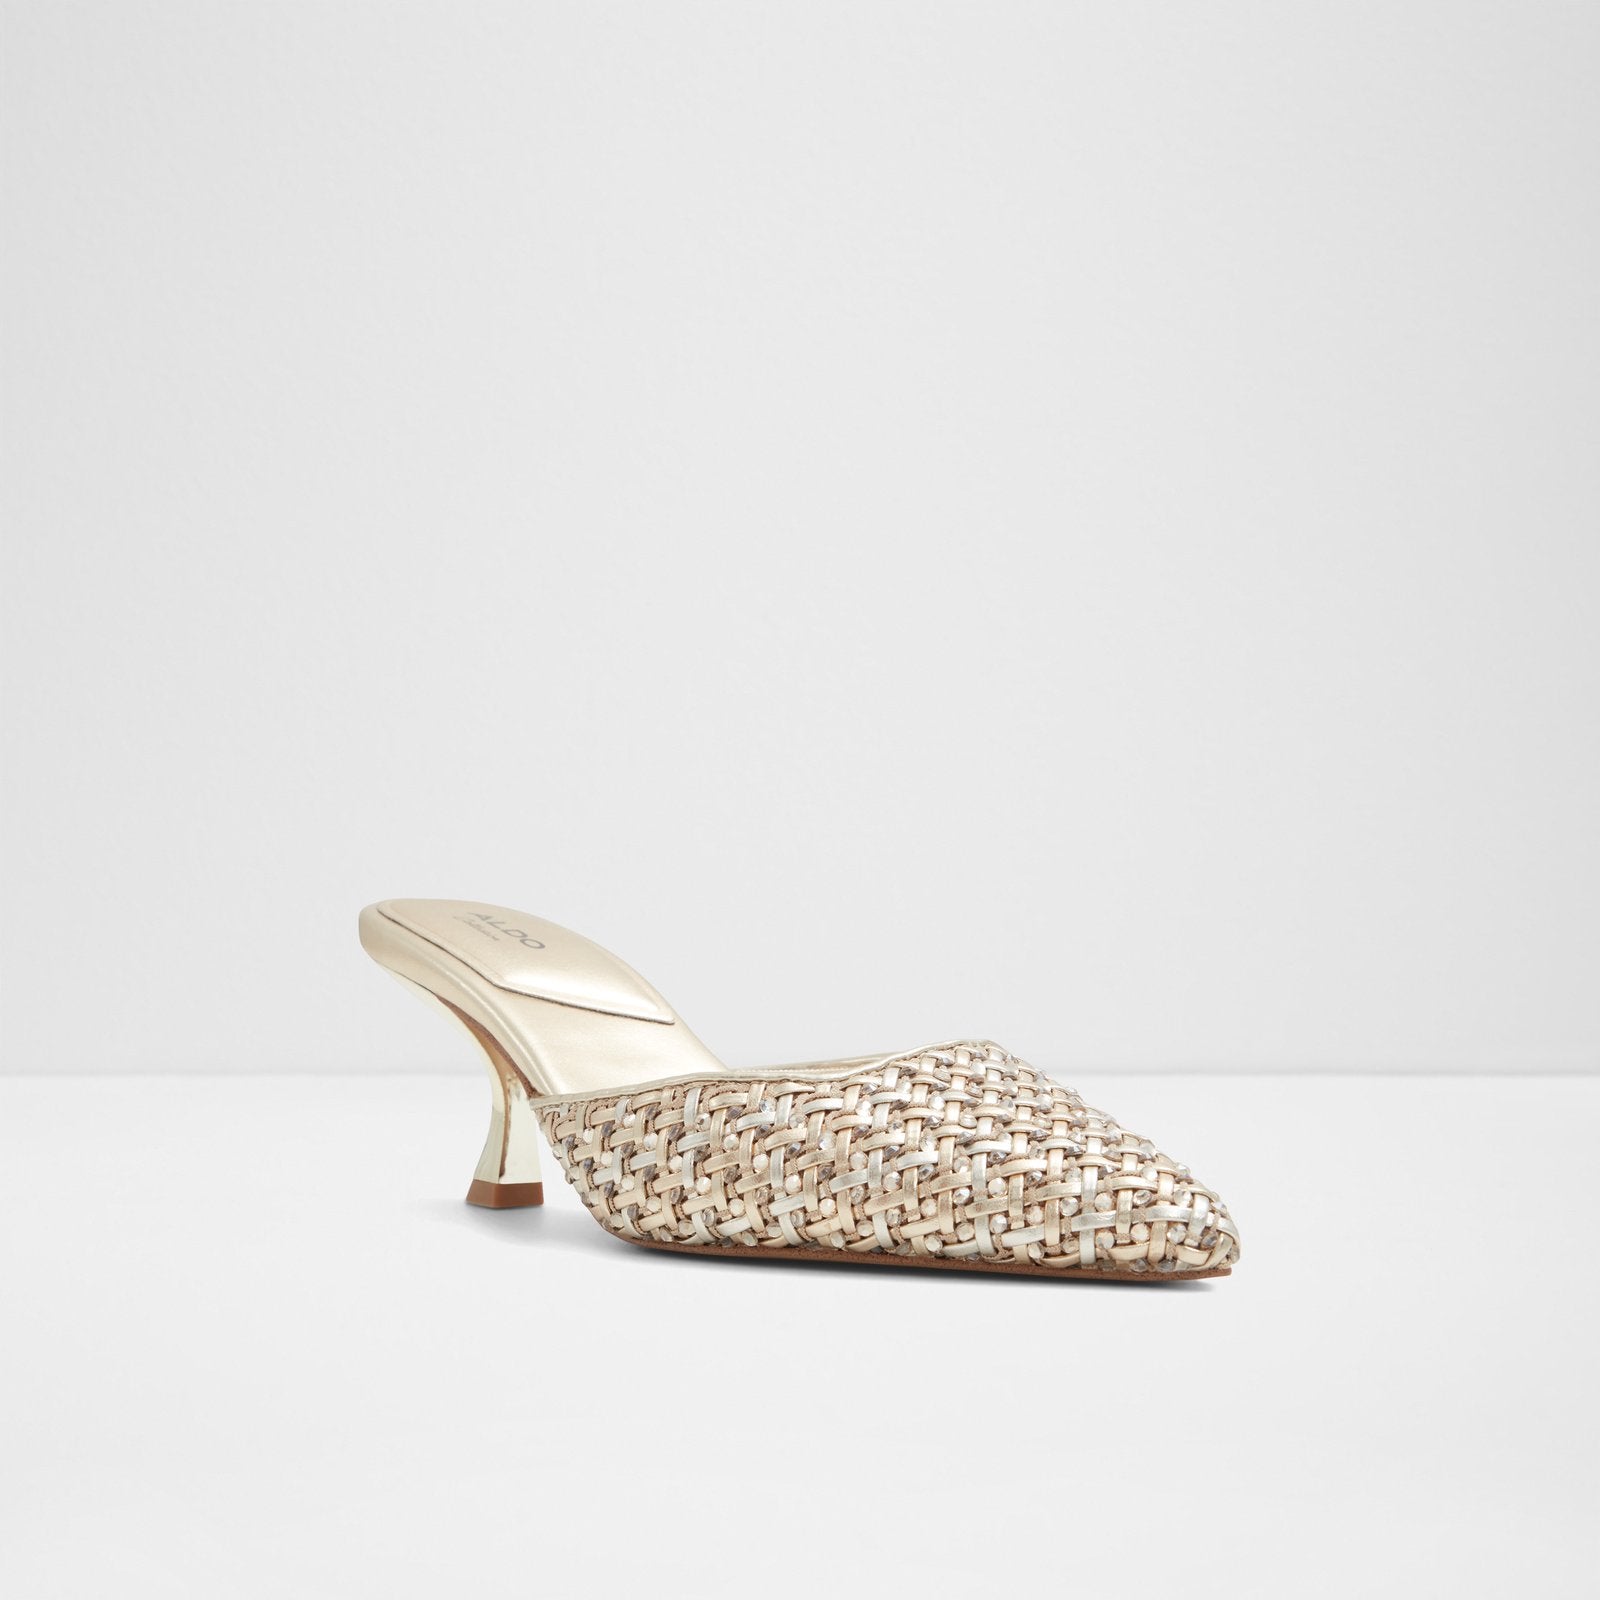 Eleonoremule / Heeled Shoes